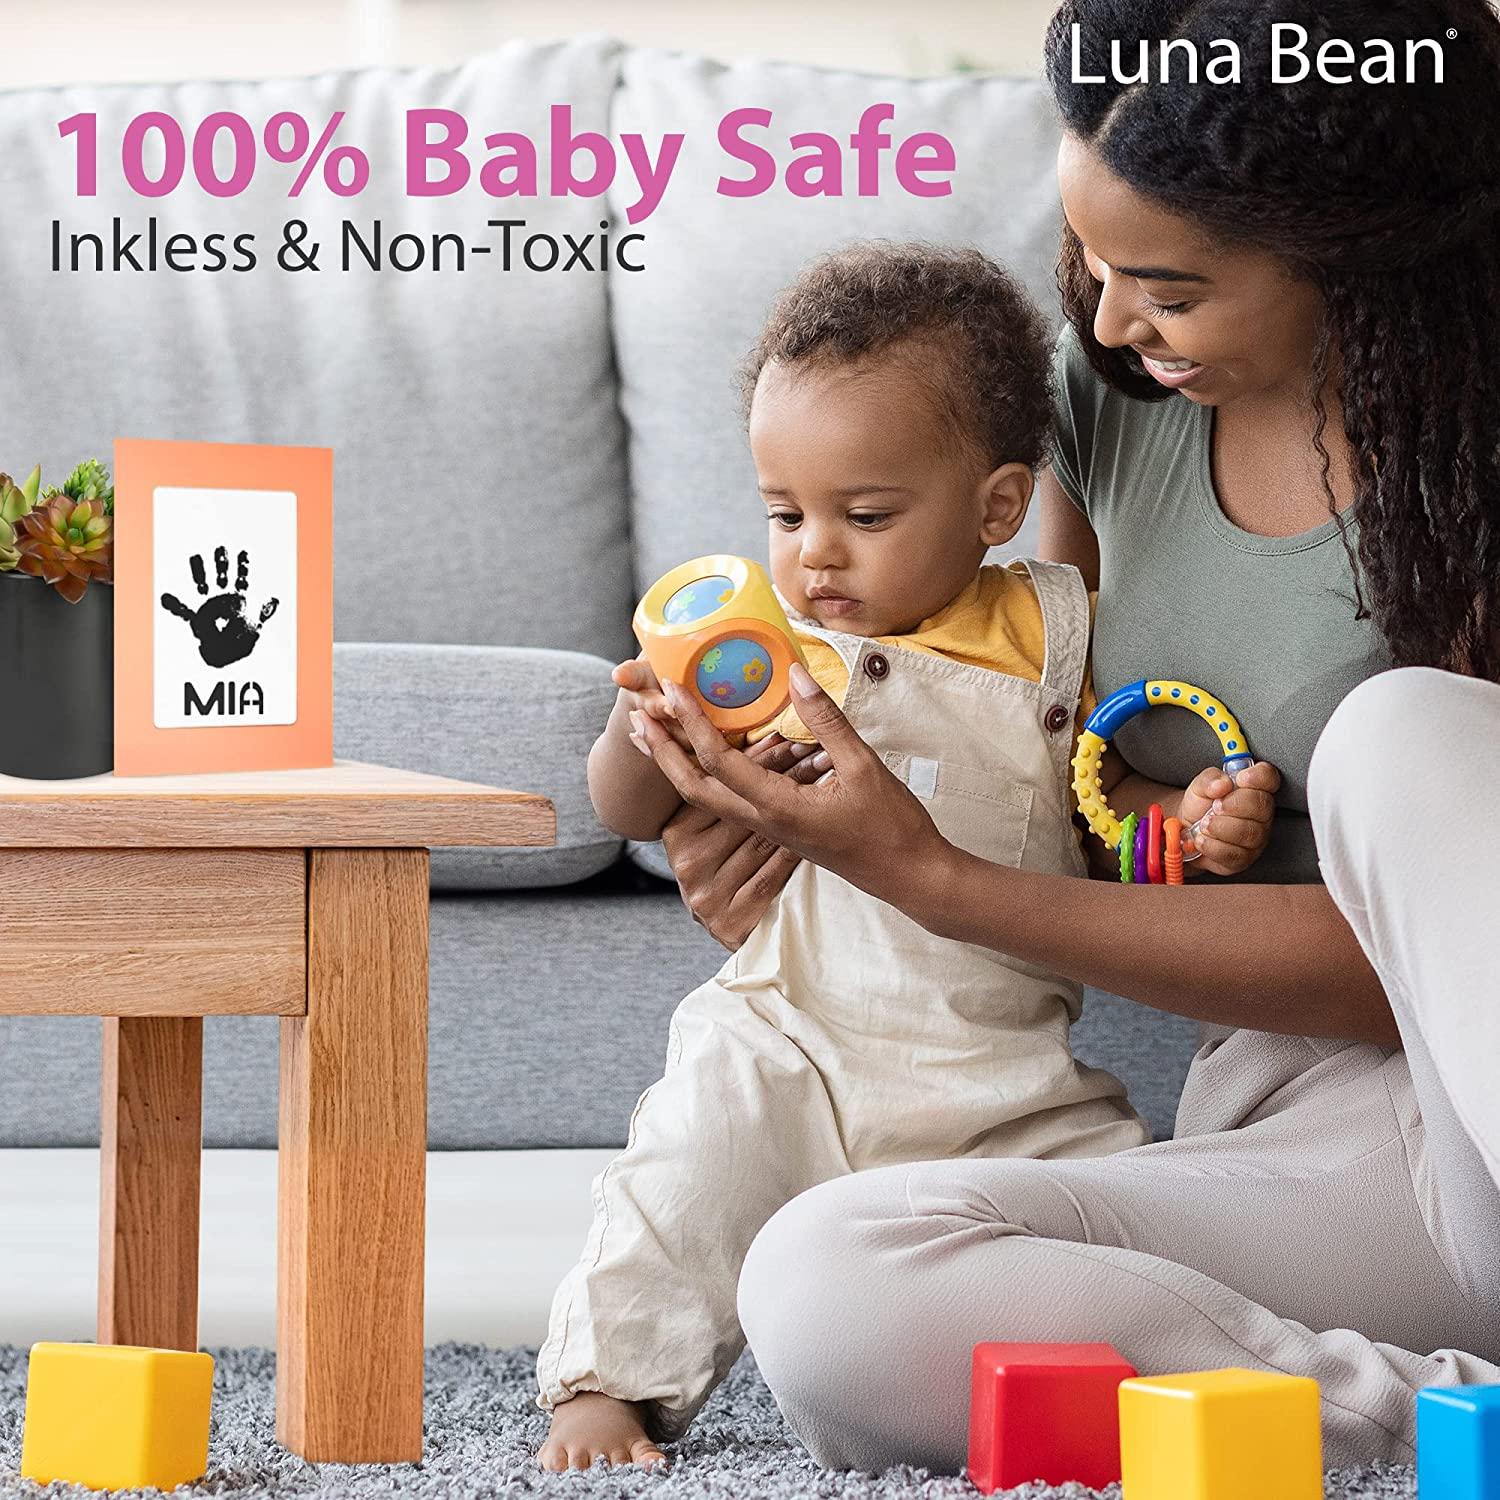 Luna Bean Baby Hand and Footprint Kit - Non-Toxic Baby Keepsake Inkless Hand and Footprint Kit -13 Piece Baby Footprint Kit Clean Touch Ink Pad for